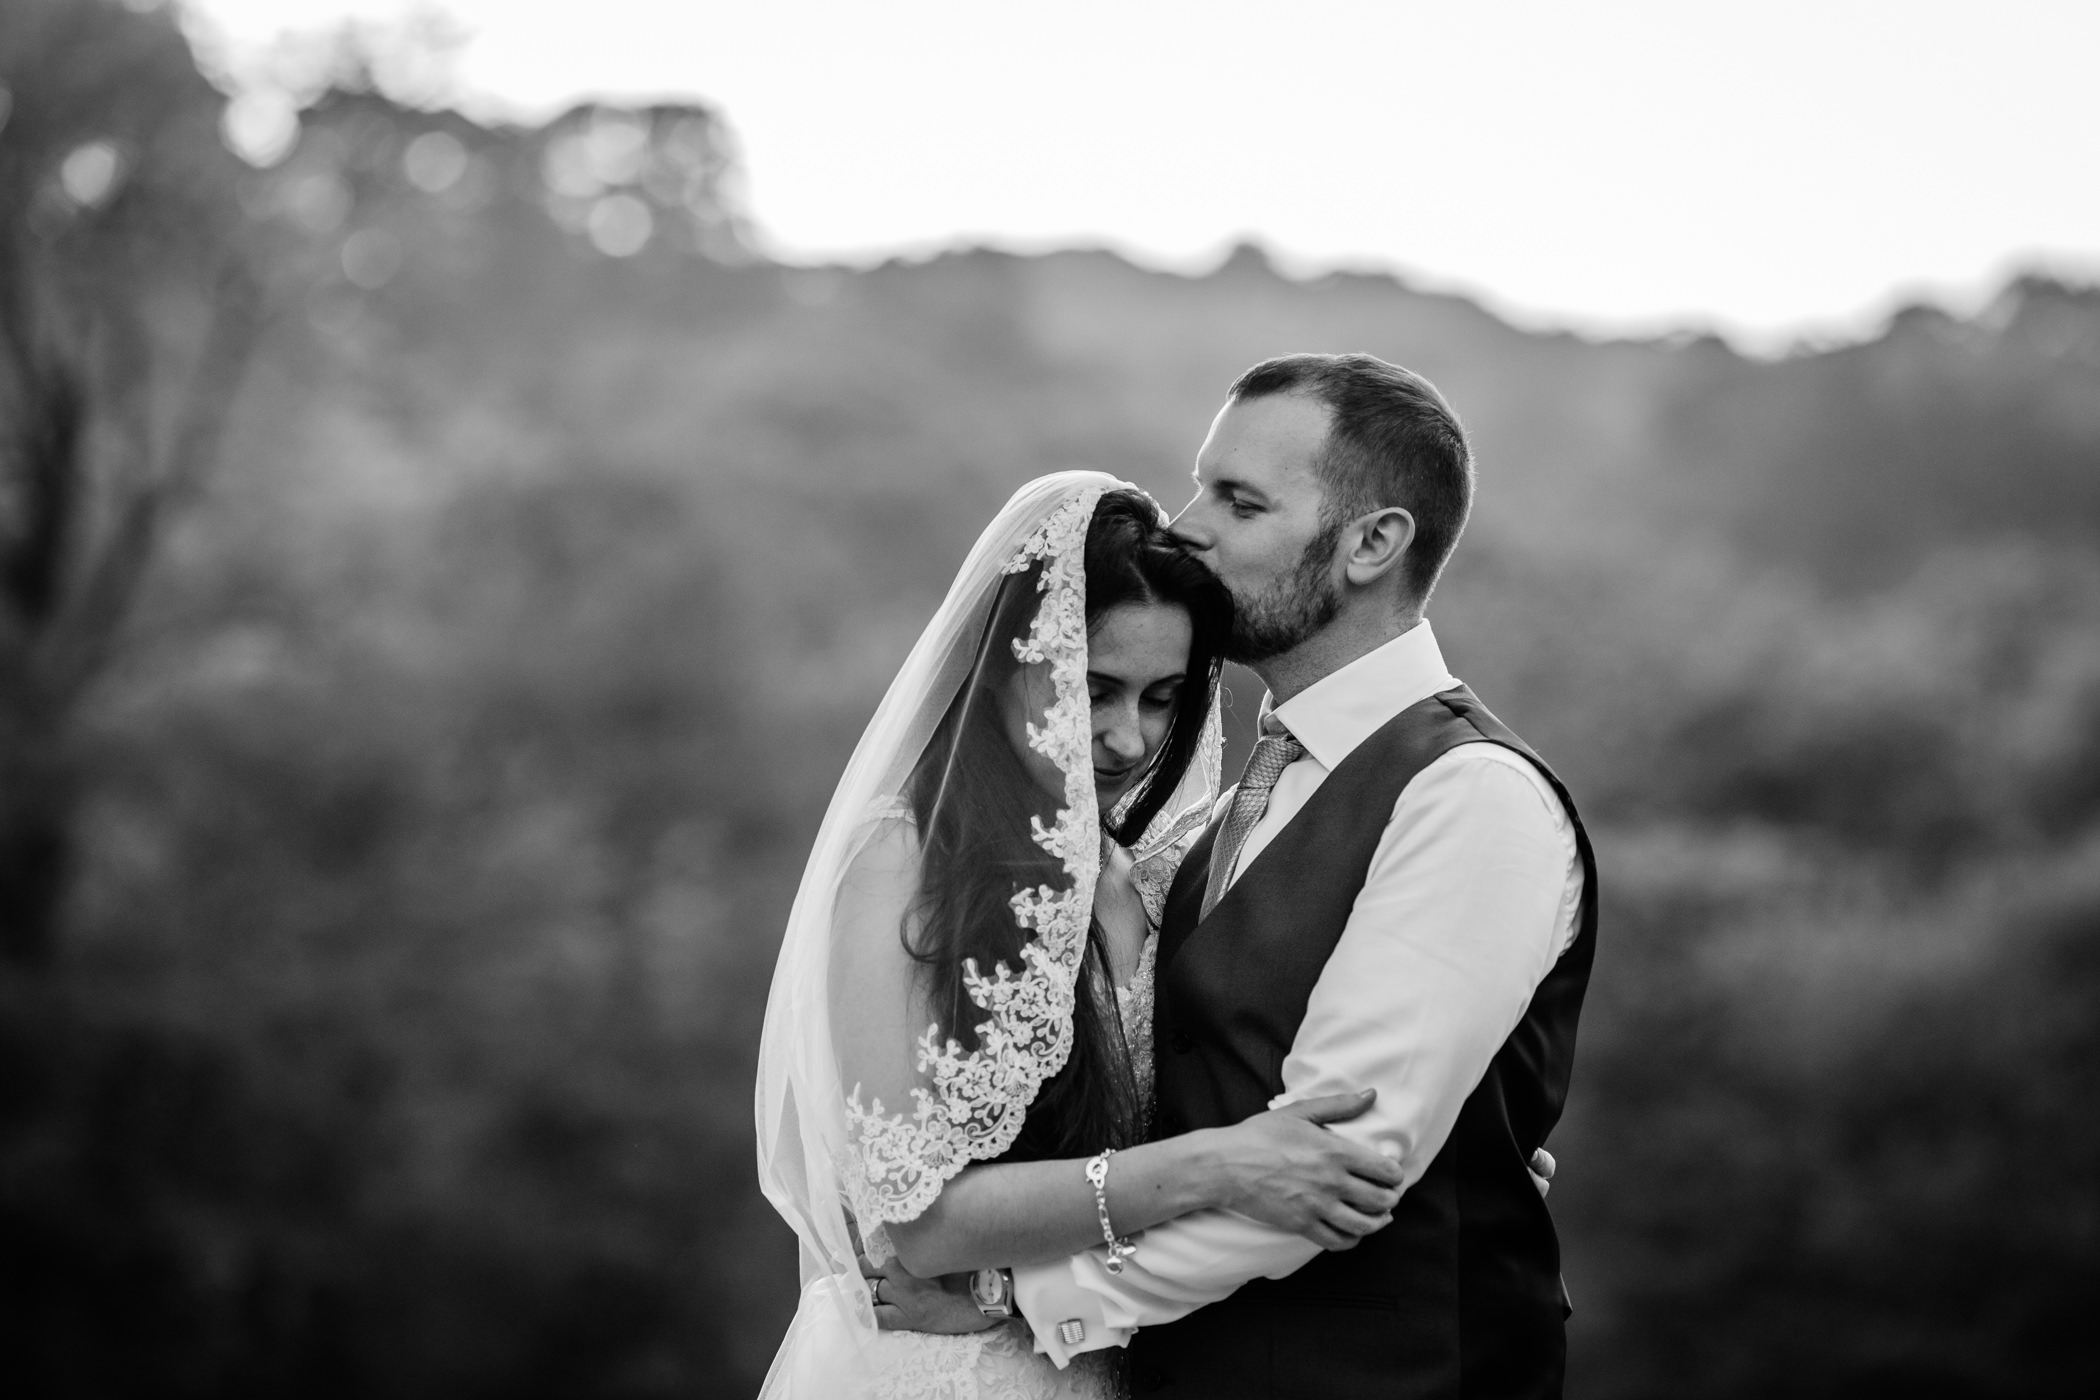 Kelly & Matt - Sansom Photography Manchester Wedding Photography-37